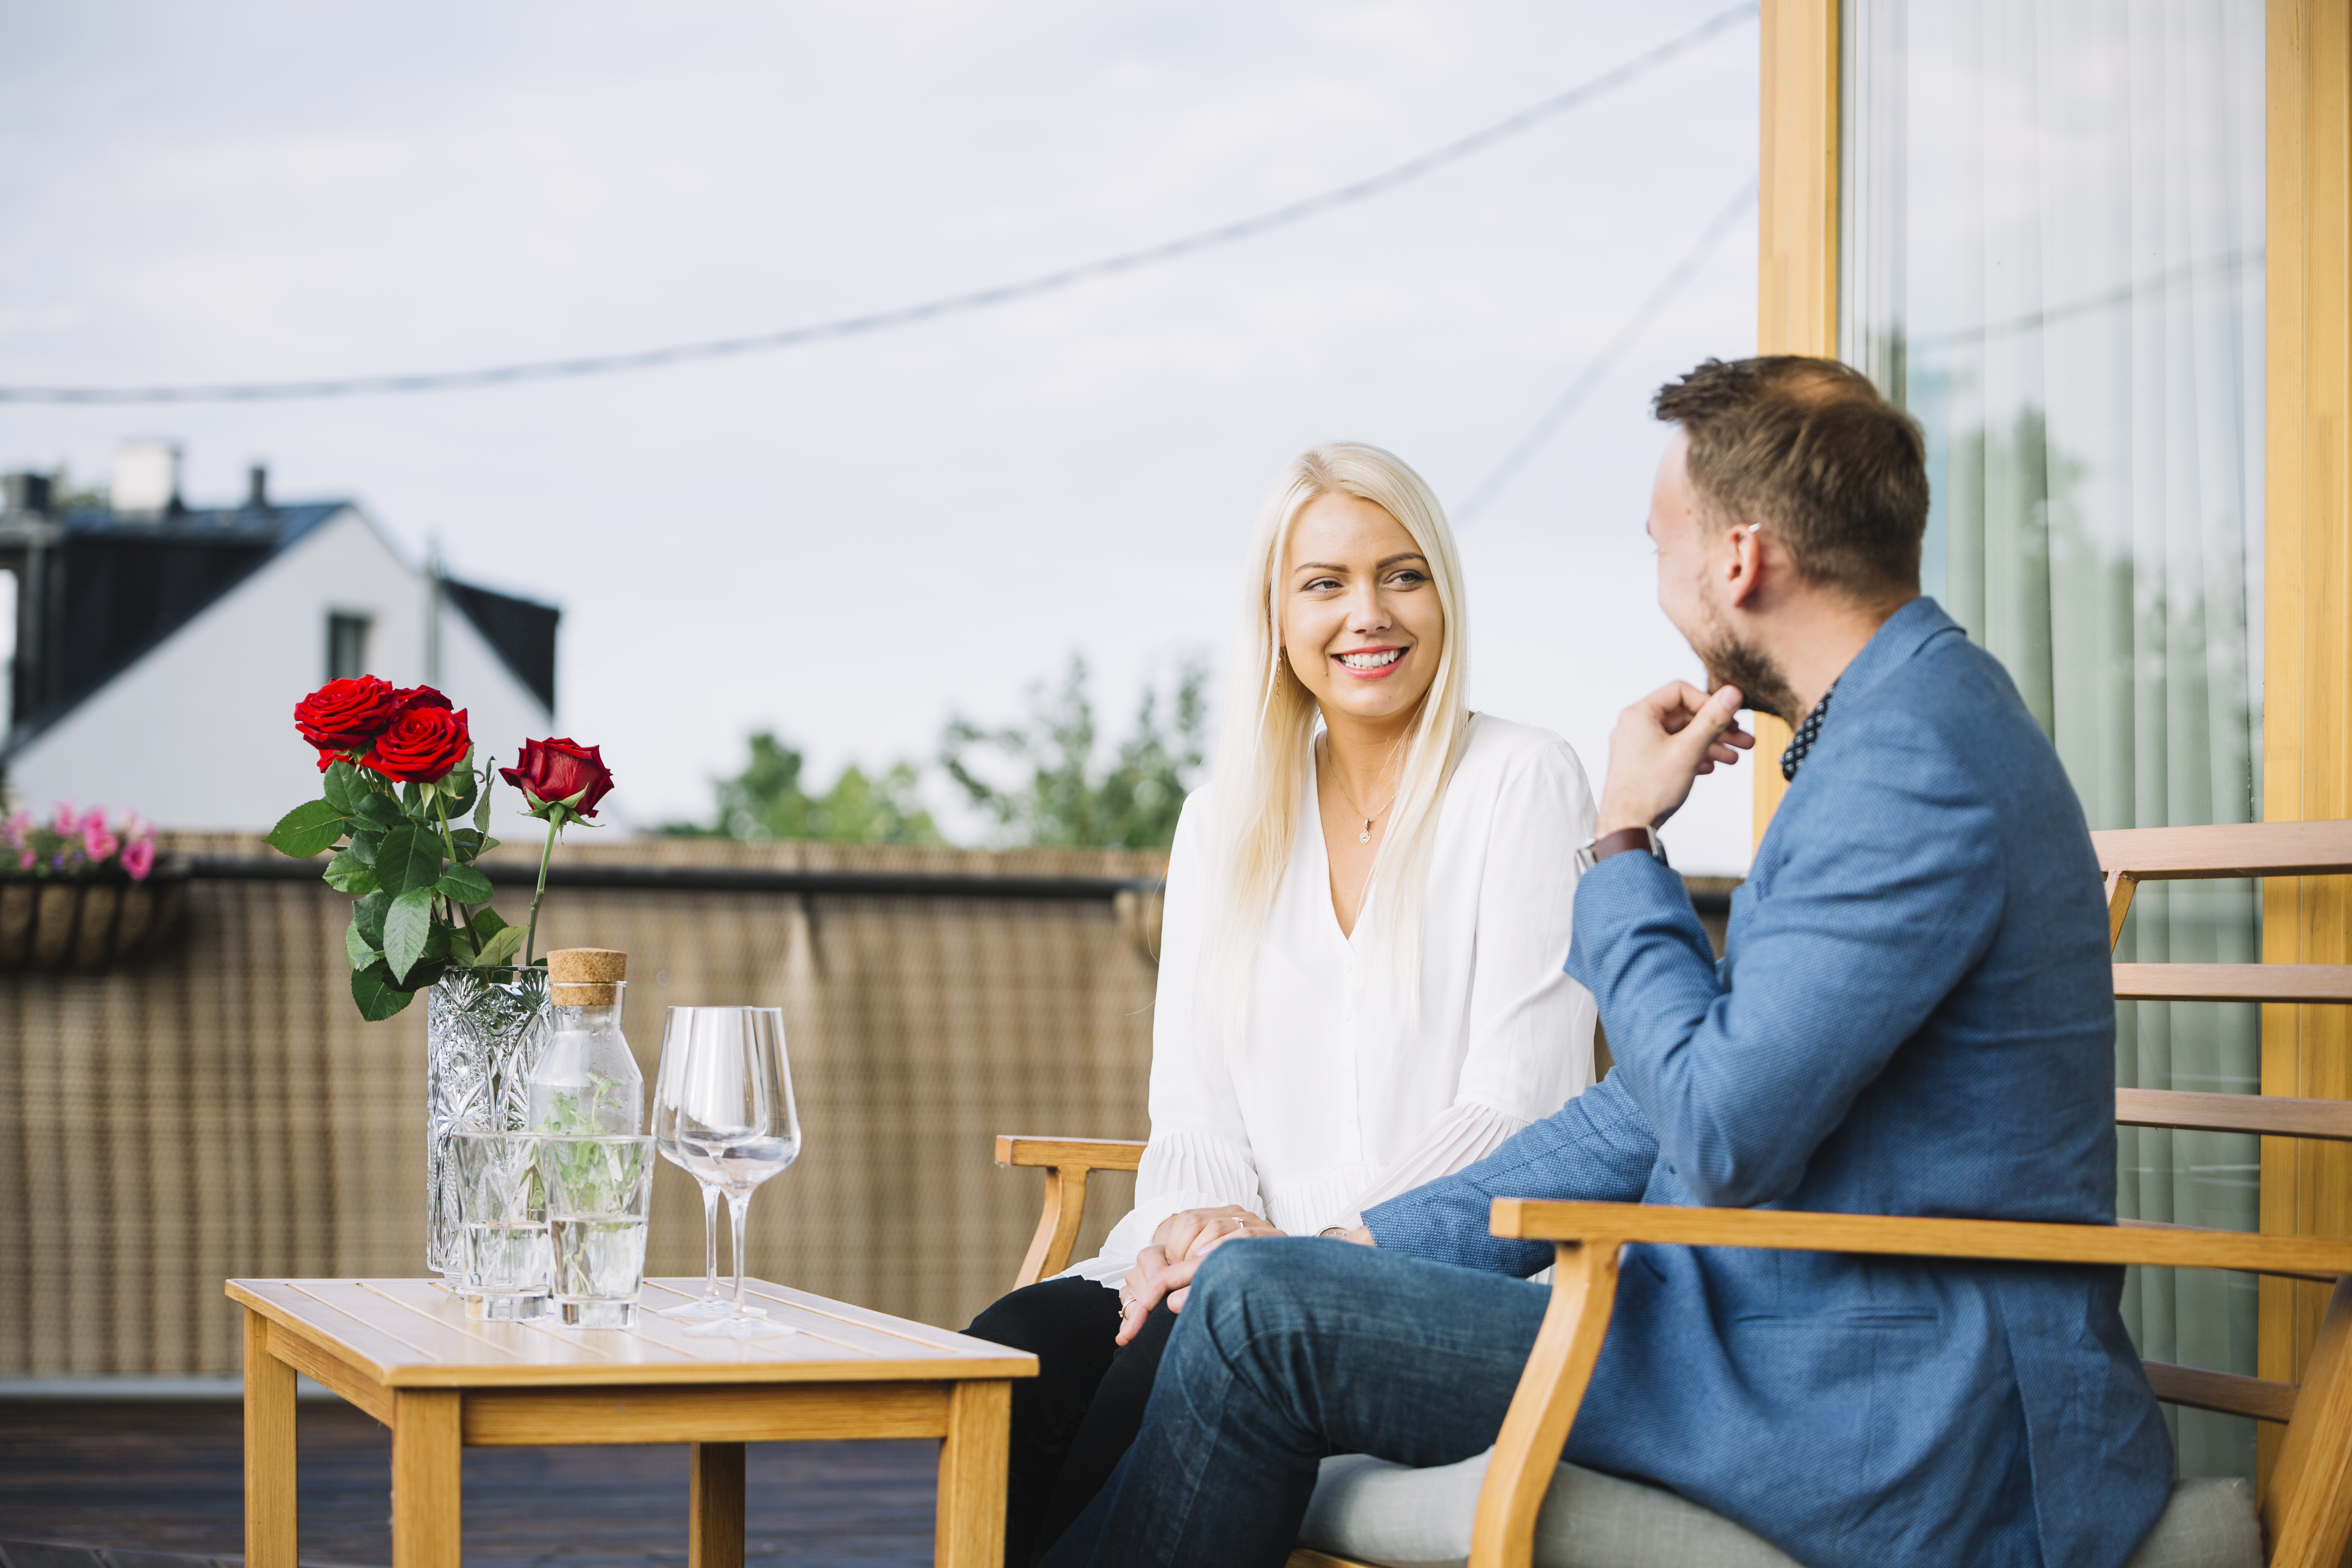 Couple on an outdoor date | Source: Freepik